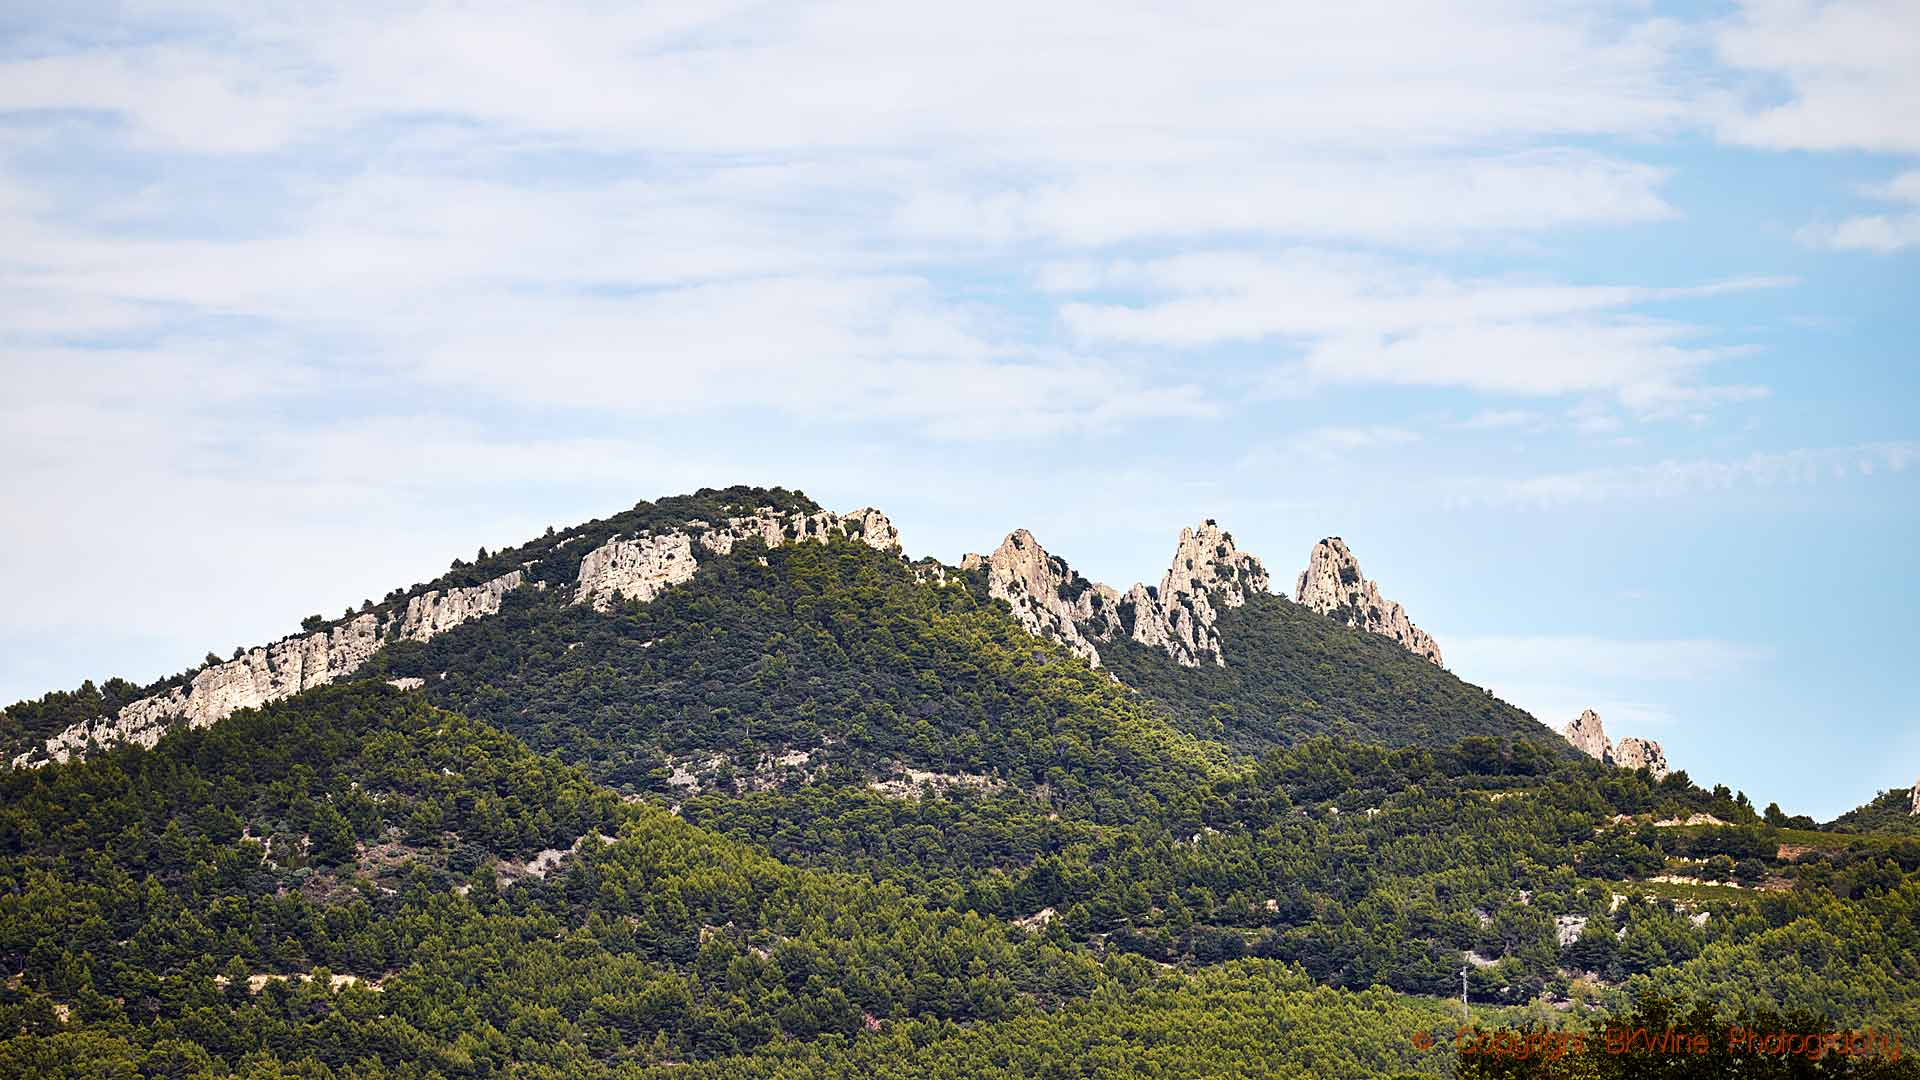 The Dentelles de Montmirail mountains in the Rhone Valley